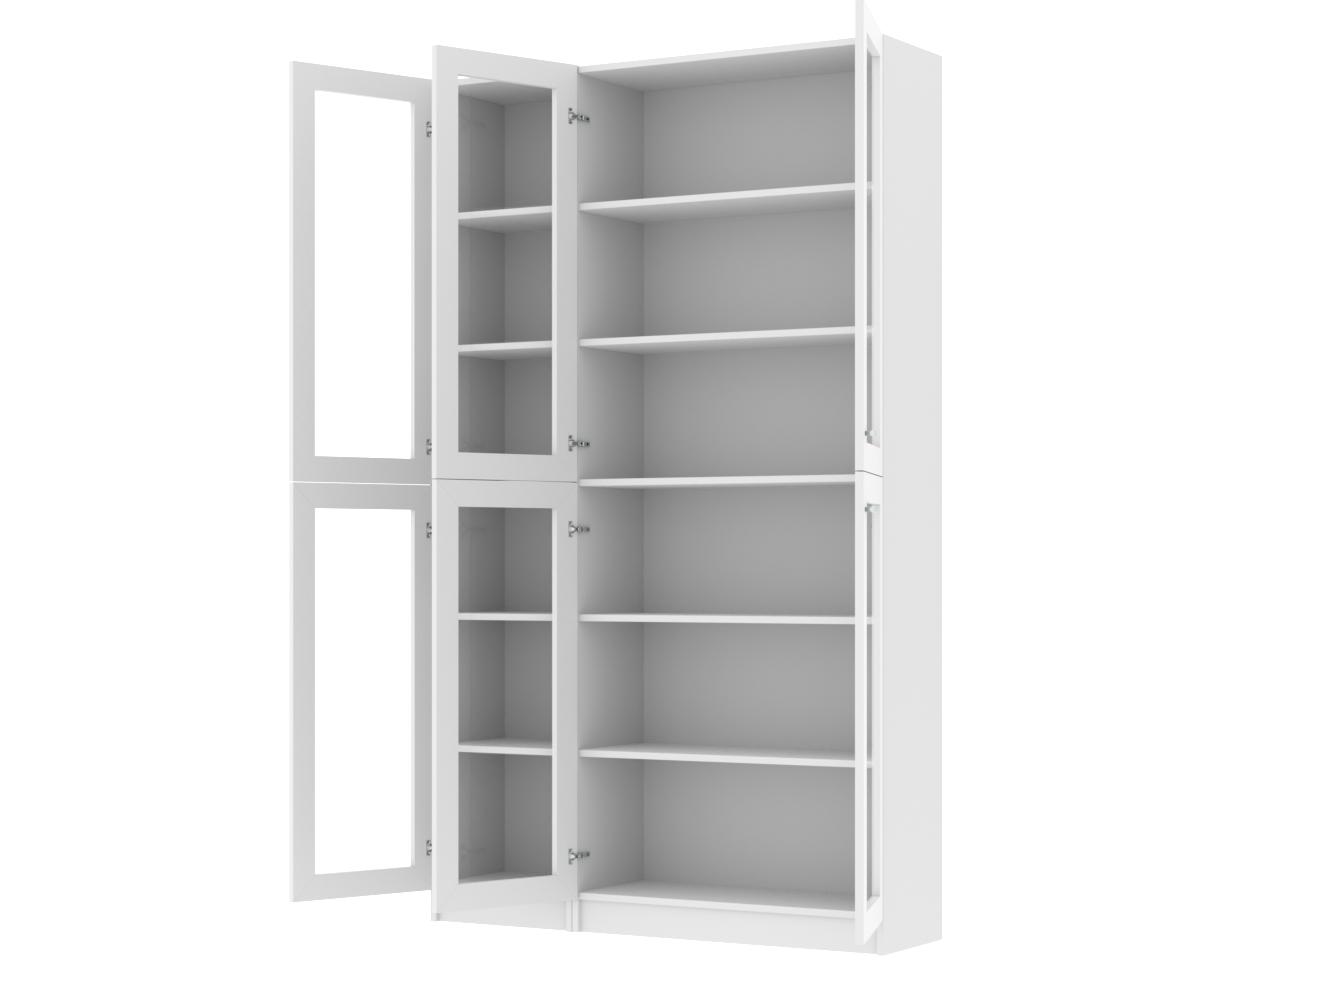 Книжный шкаф Билли 339 white ИКЕА (IKEA) изображение товара